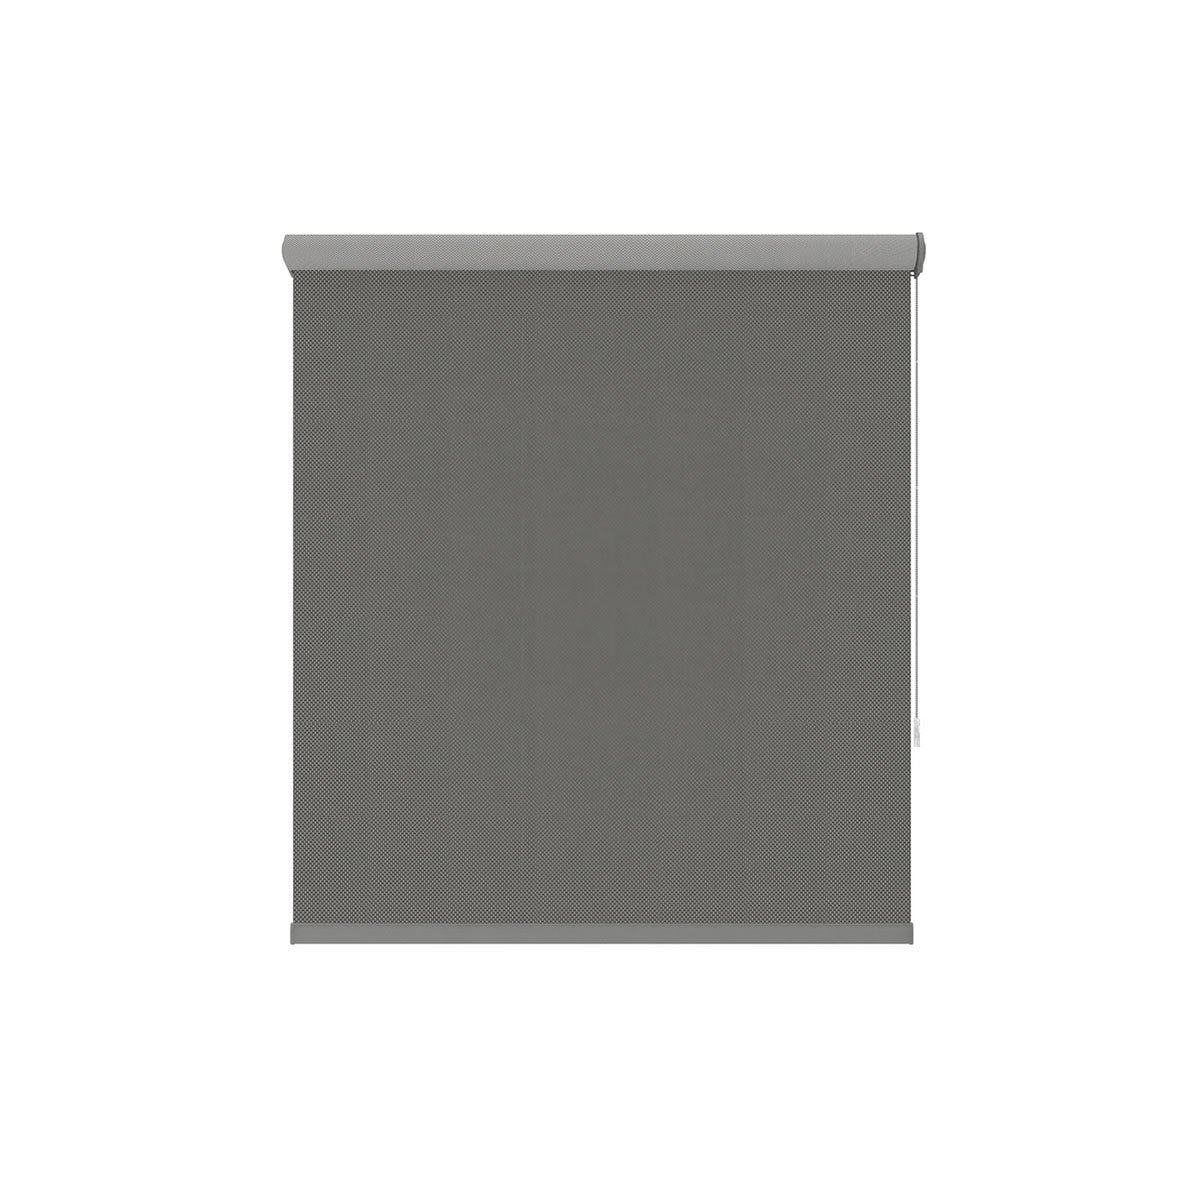 Persiana Enrollable Translucida Screen Phifer 4500 New 1.20 X 2.50 Granite Classic